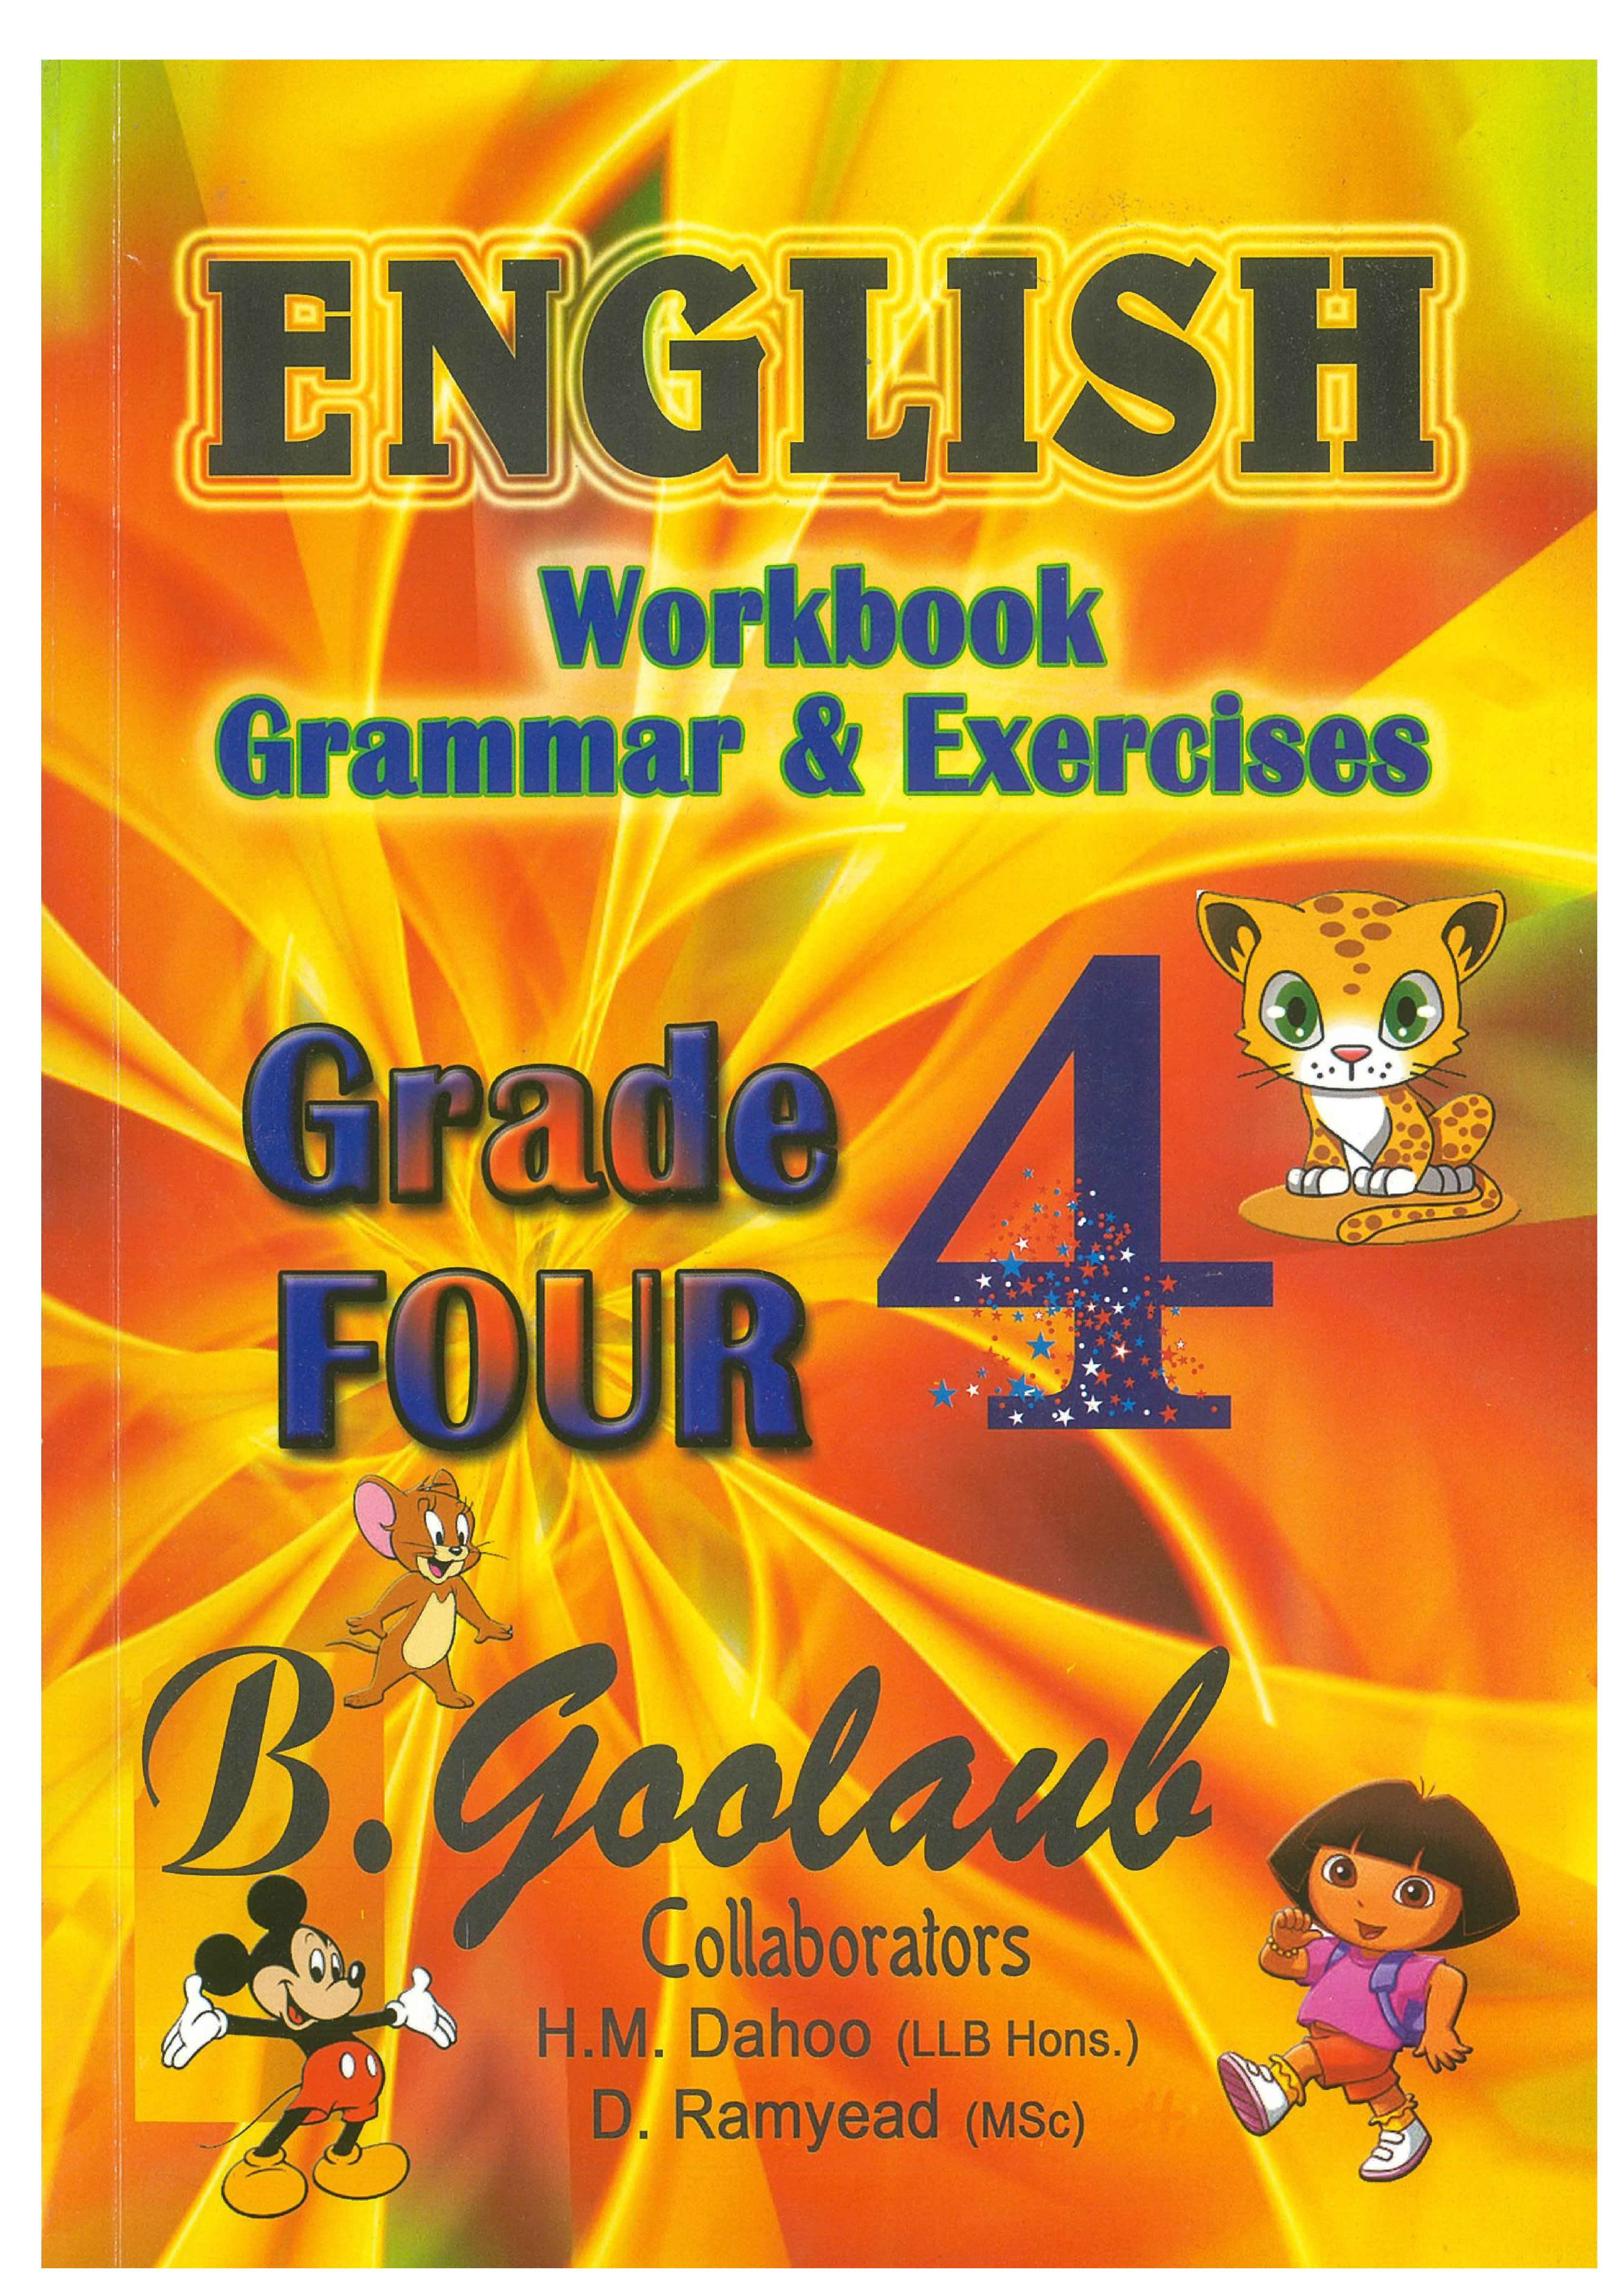 ENGLISH WORKBOOK GRADE 4 